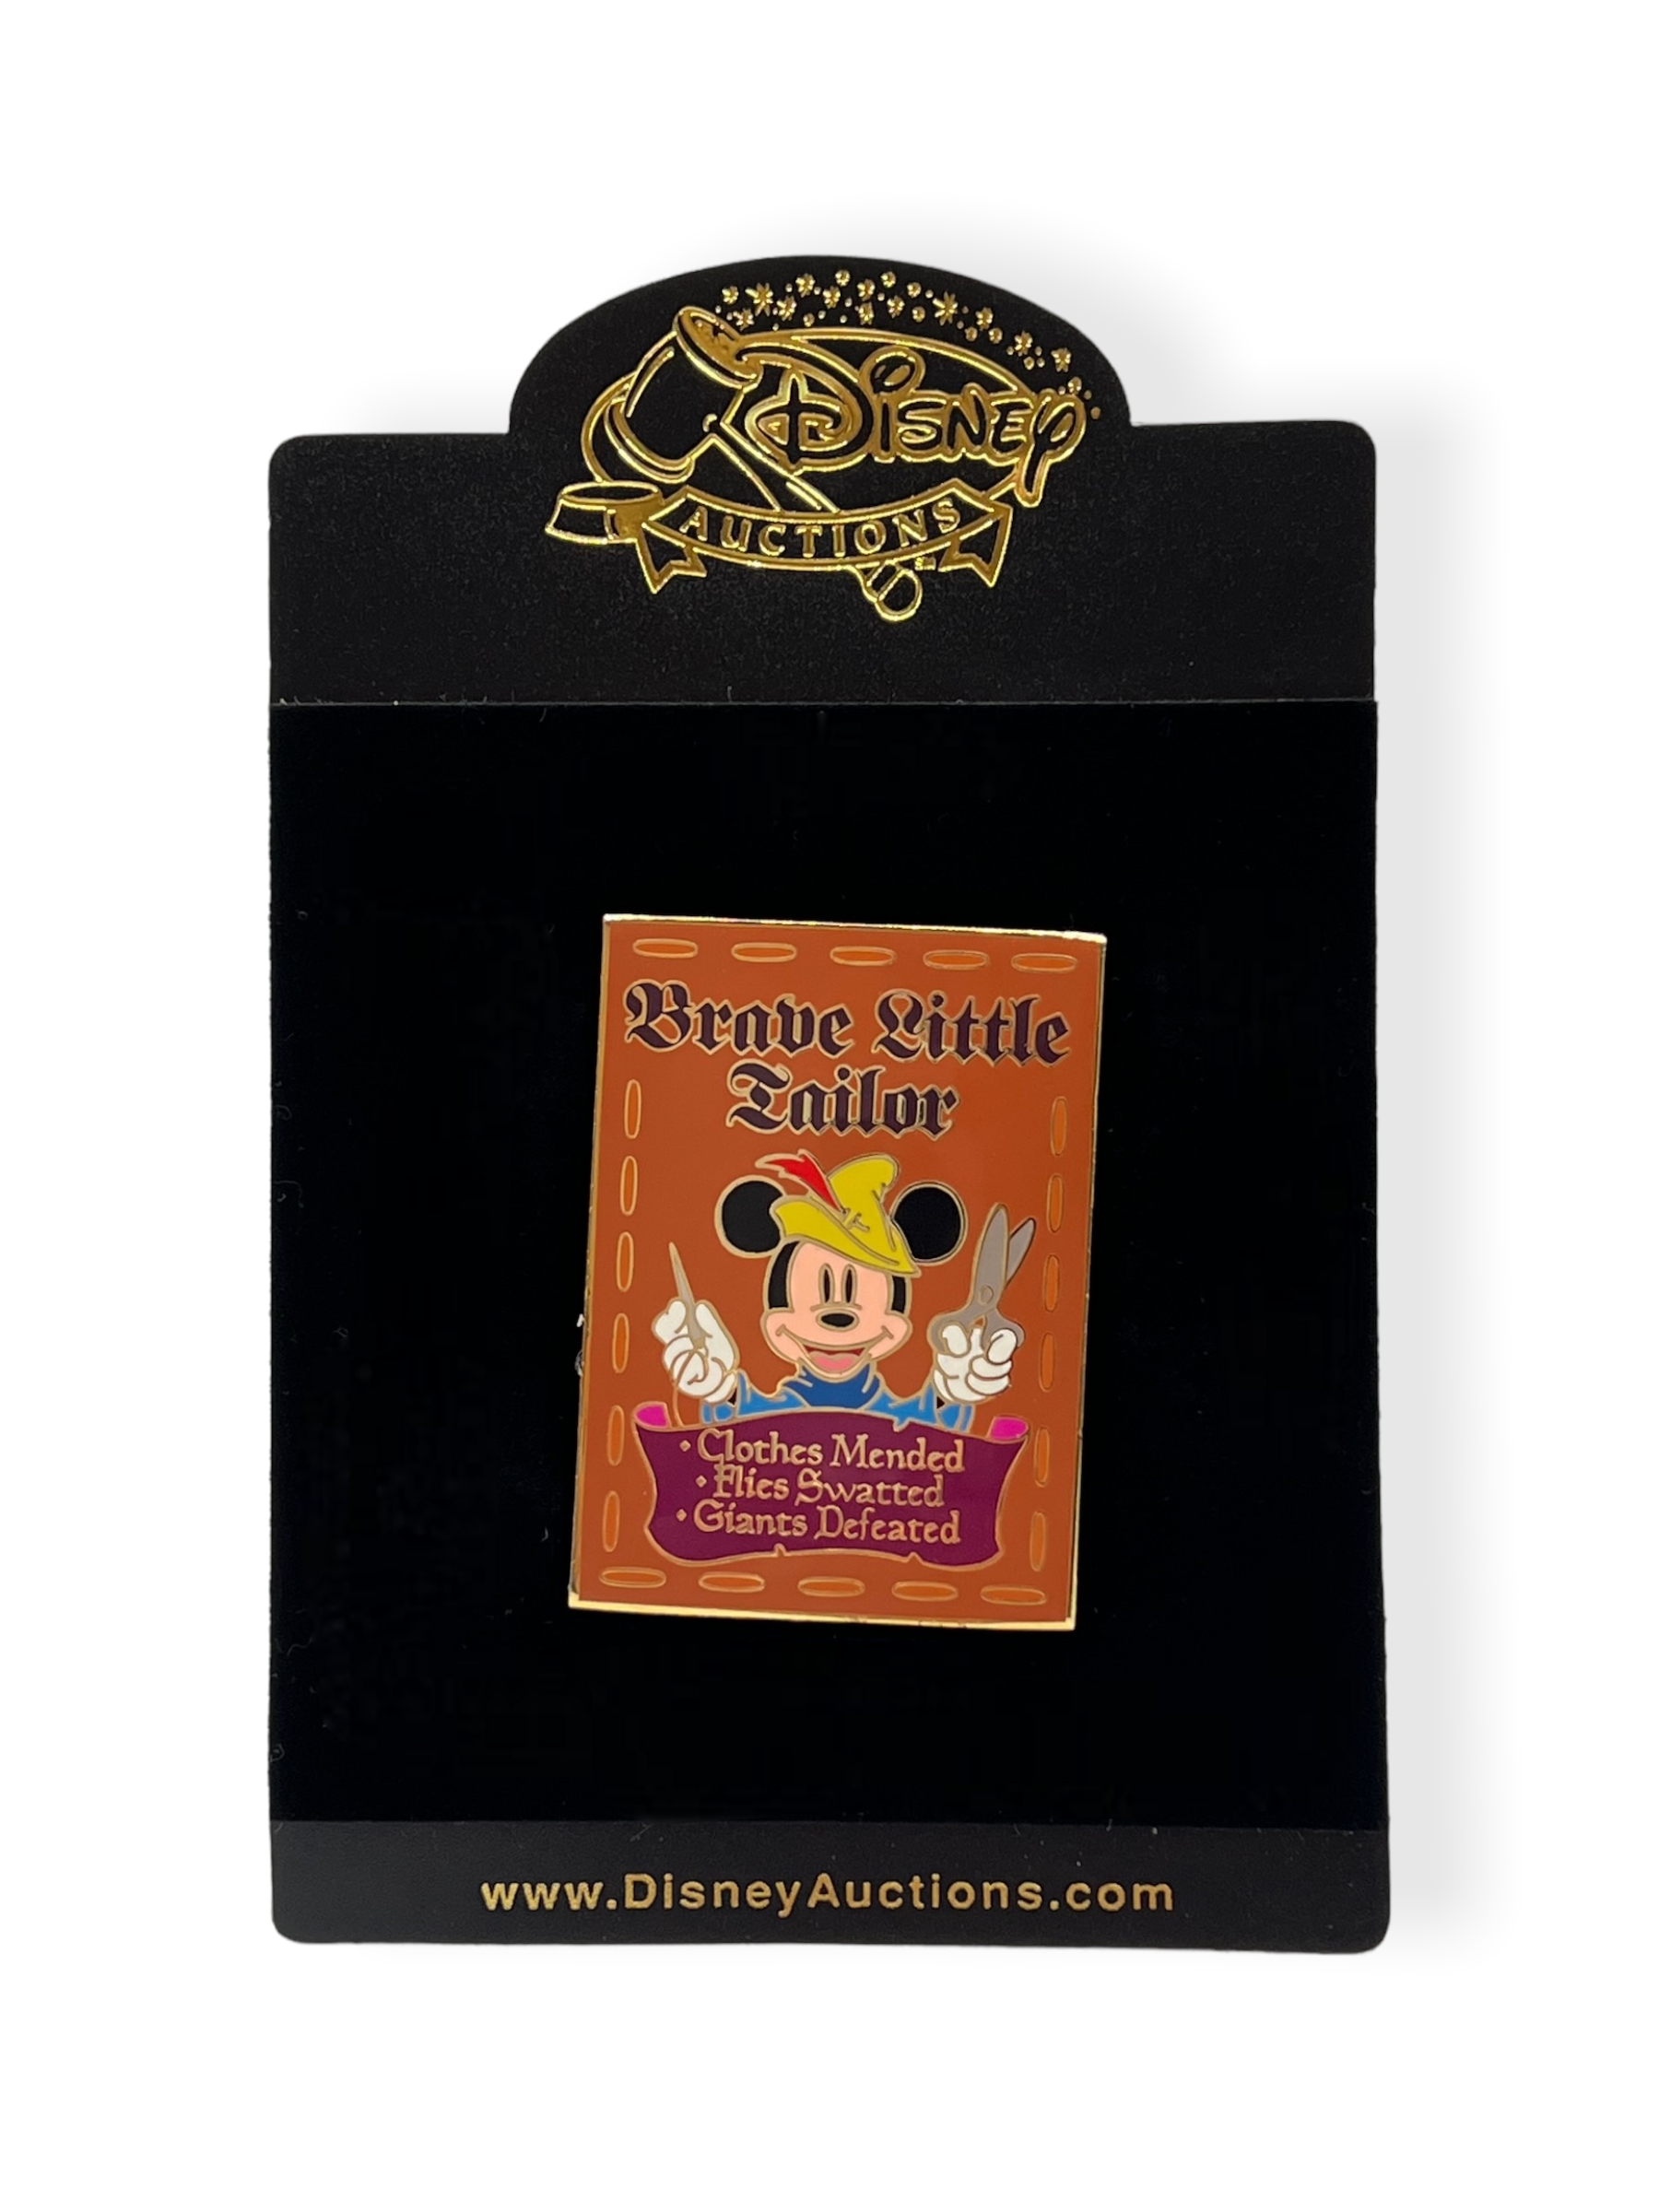 Disney Auctions Business Ads Brave Little Tailor Pin